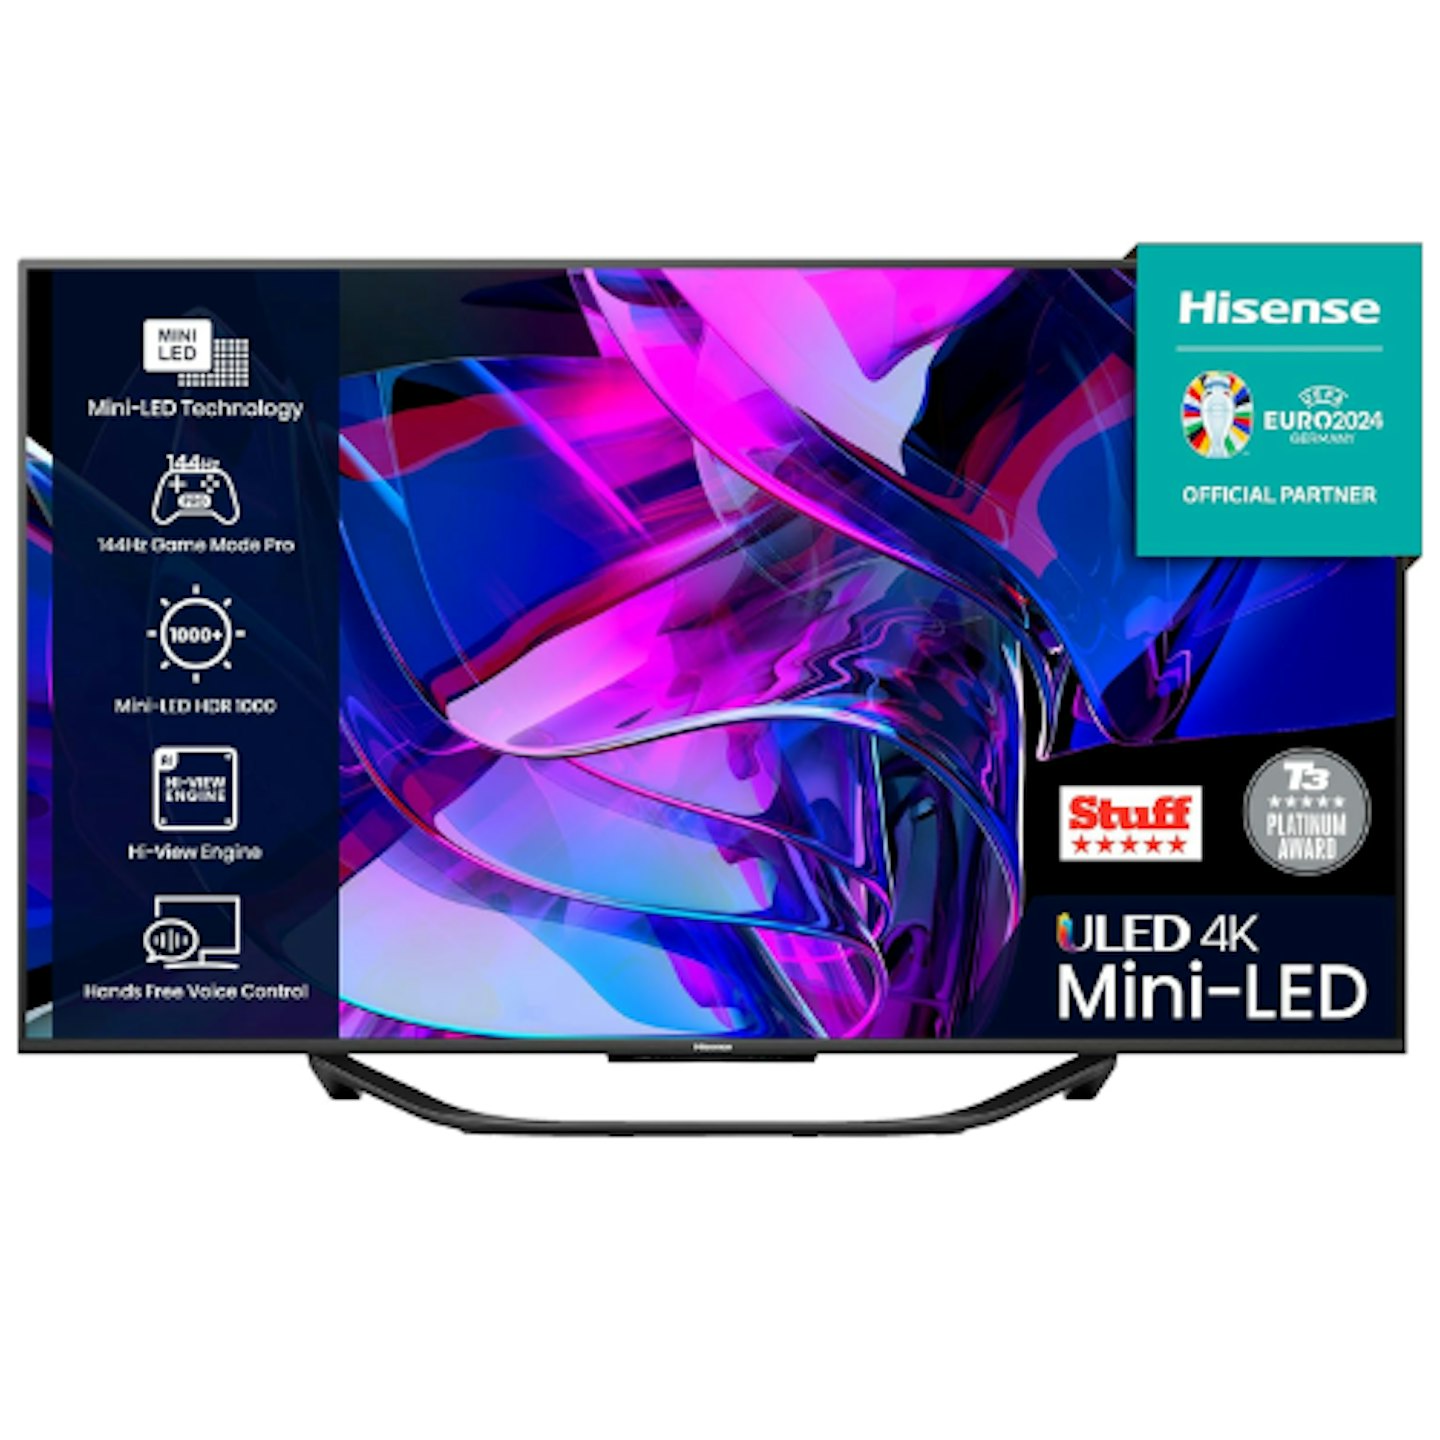 Hisense 65 Inch 144Hz ULED Mini-LED Smart TV